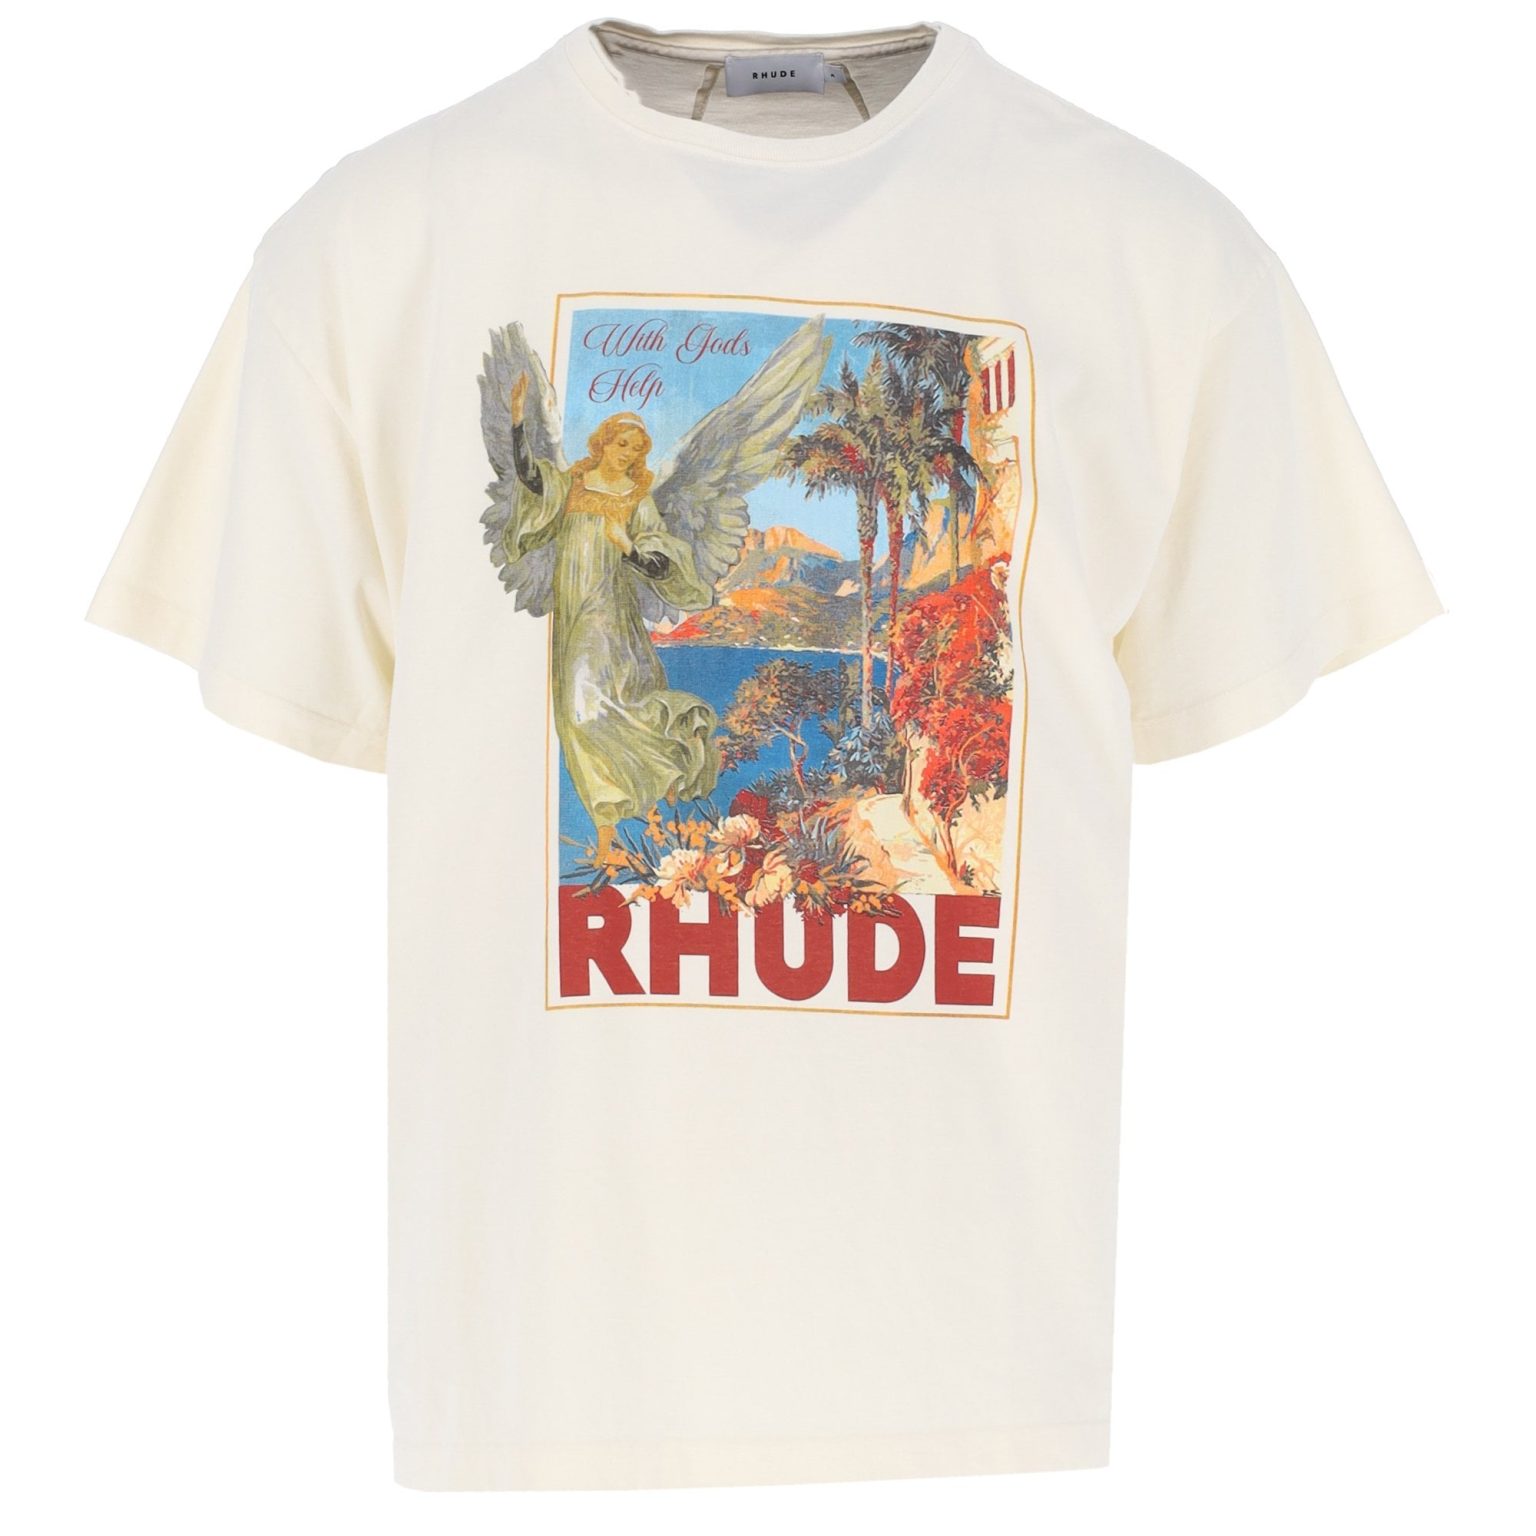 With God Help Rhude T-shirt – www.hurtee.com